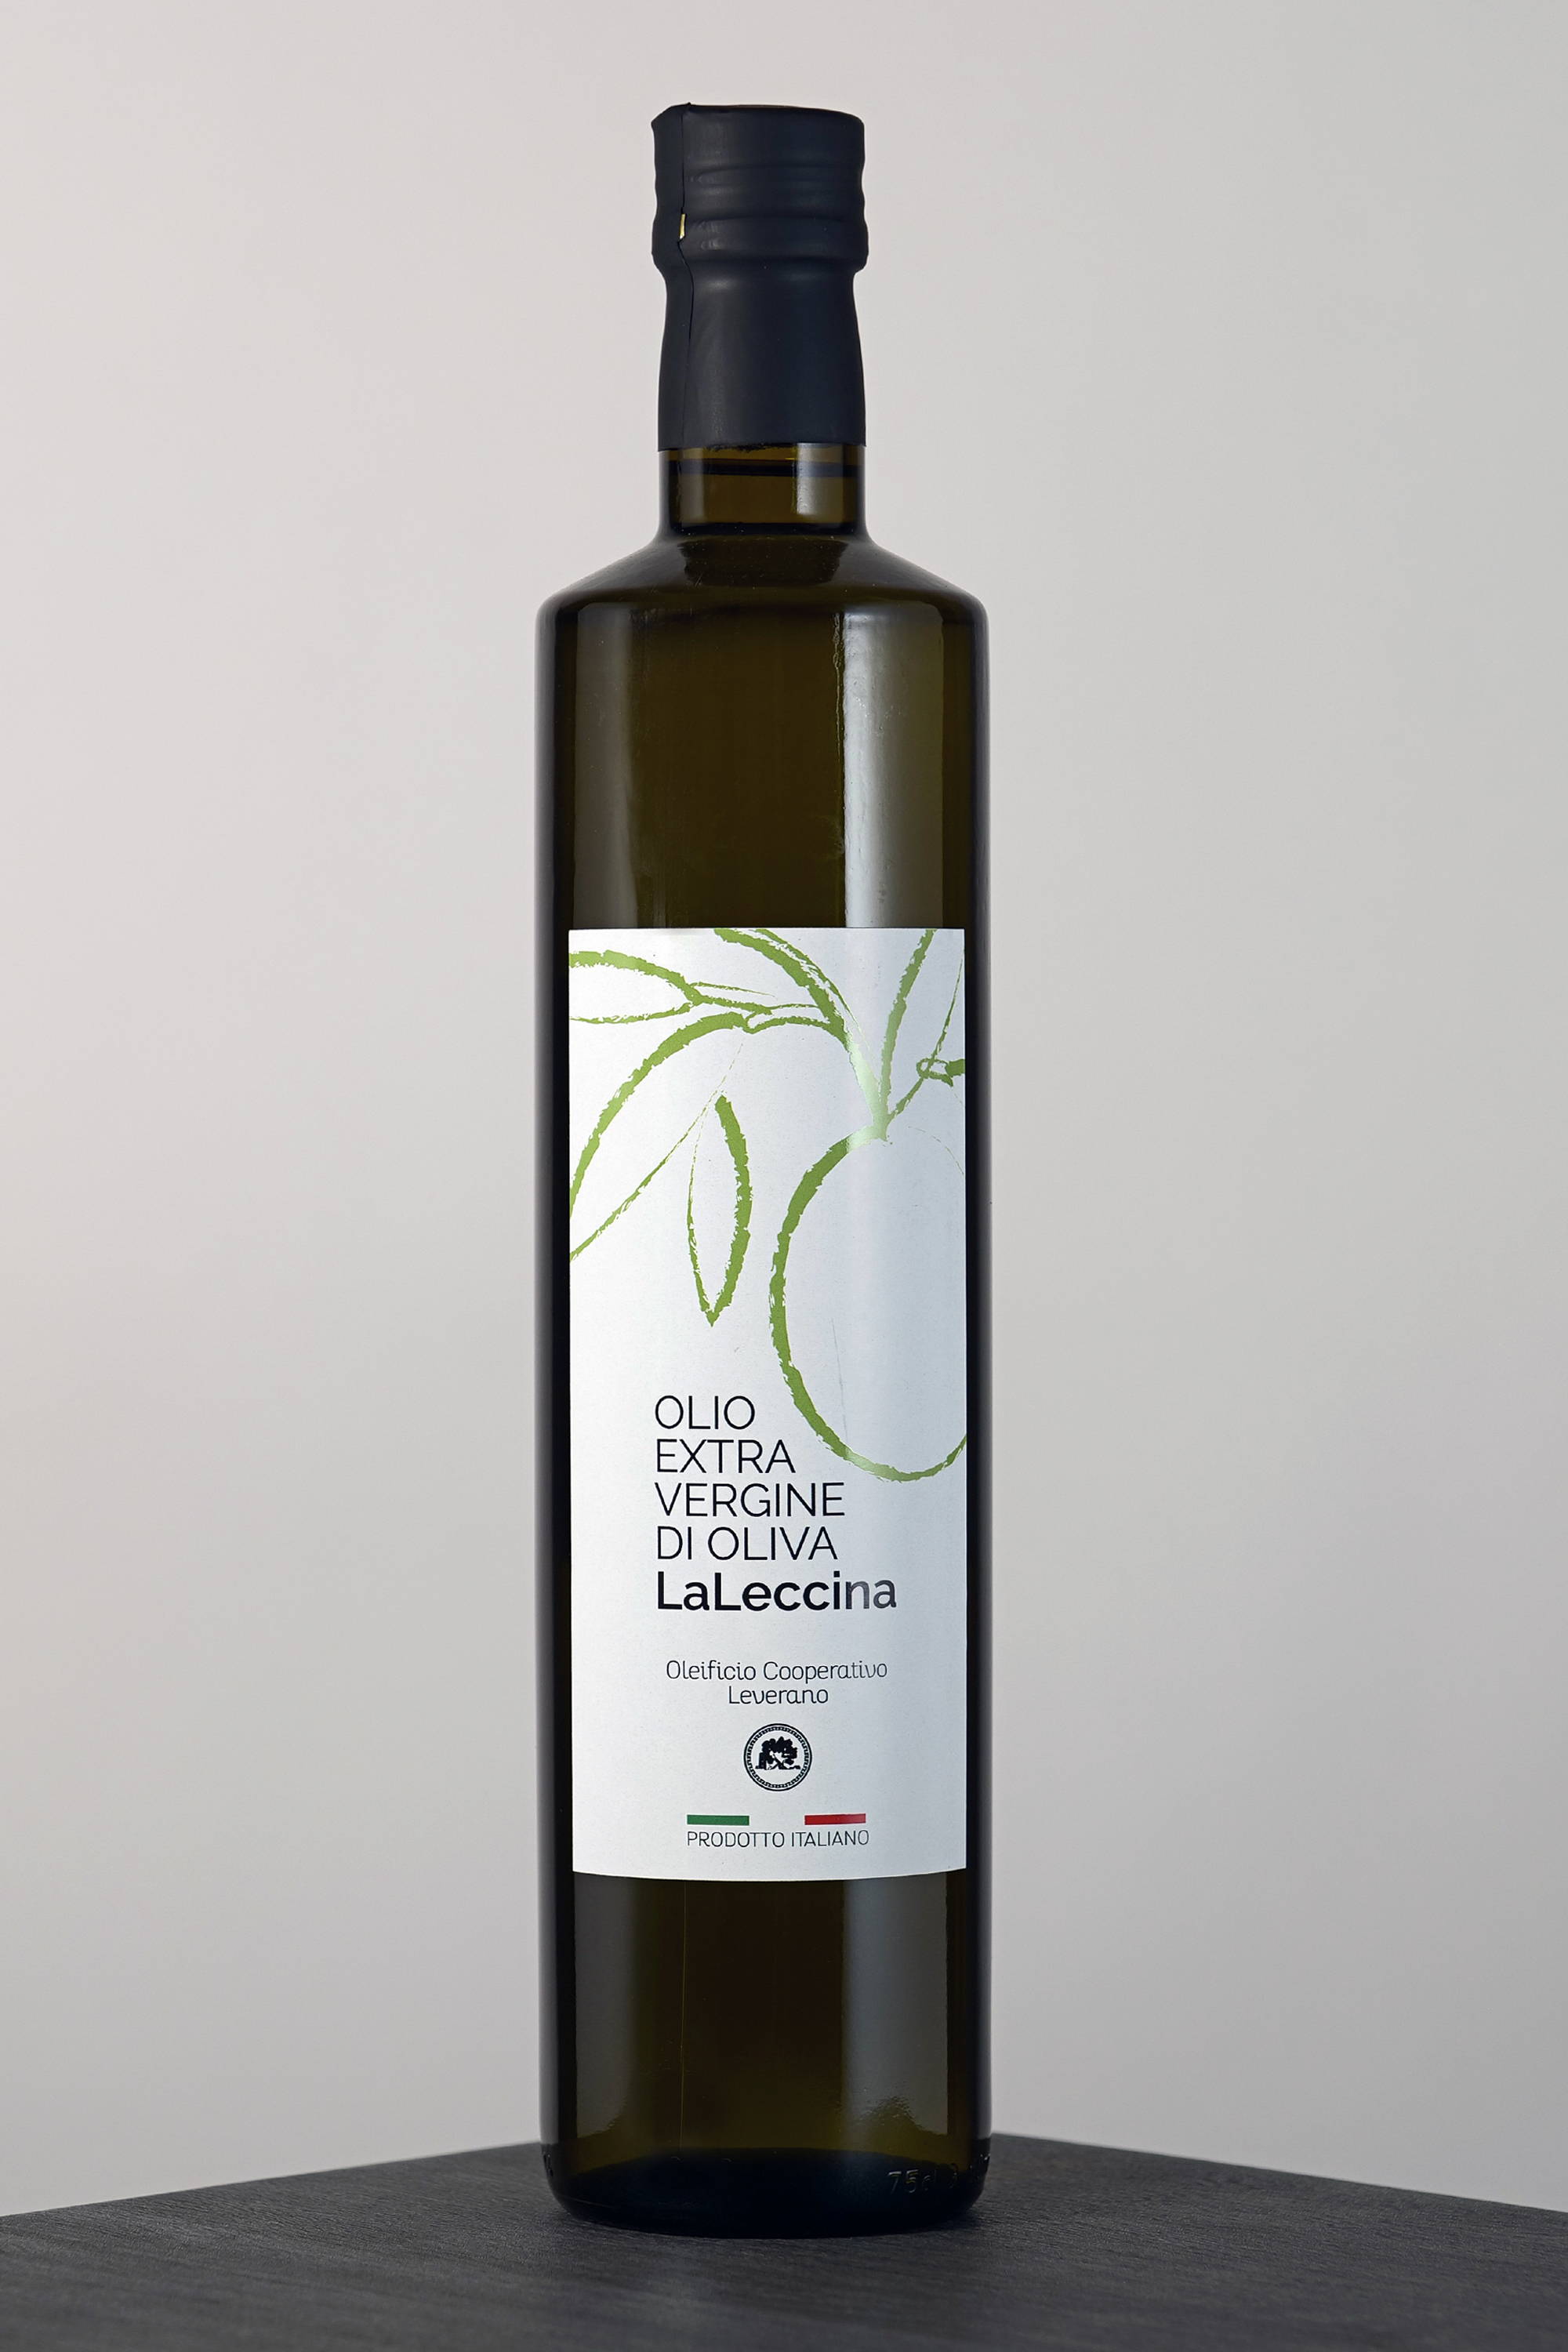 Extravergine d'oliva "LaLeccina" - lt. 0,75